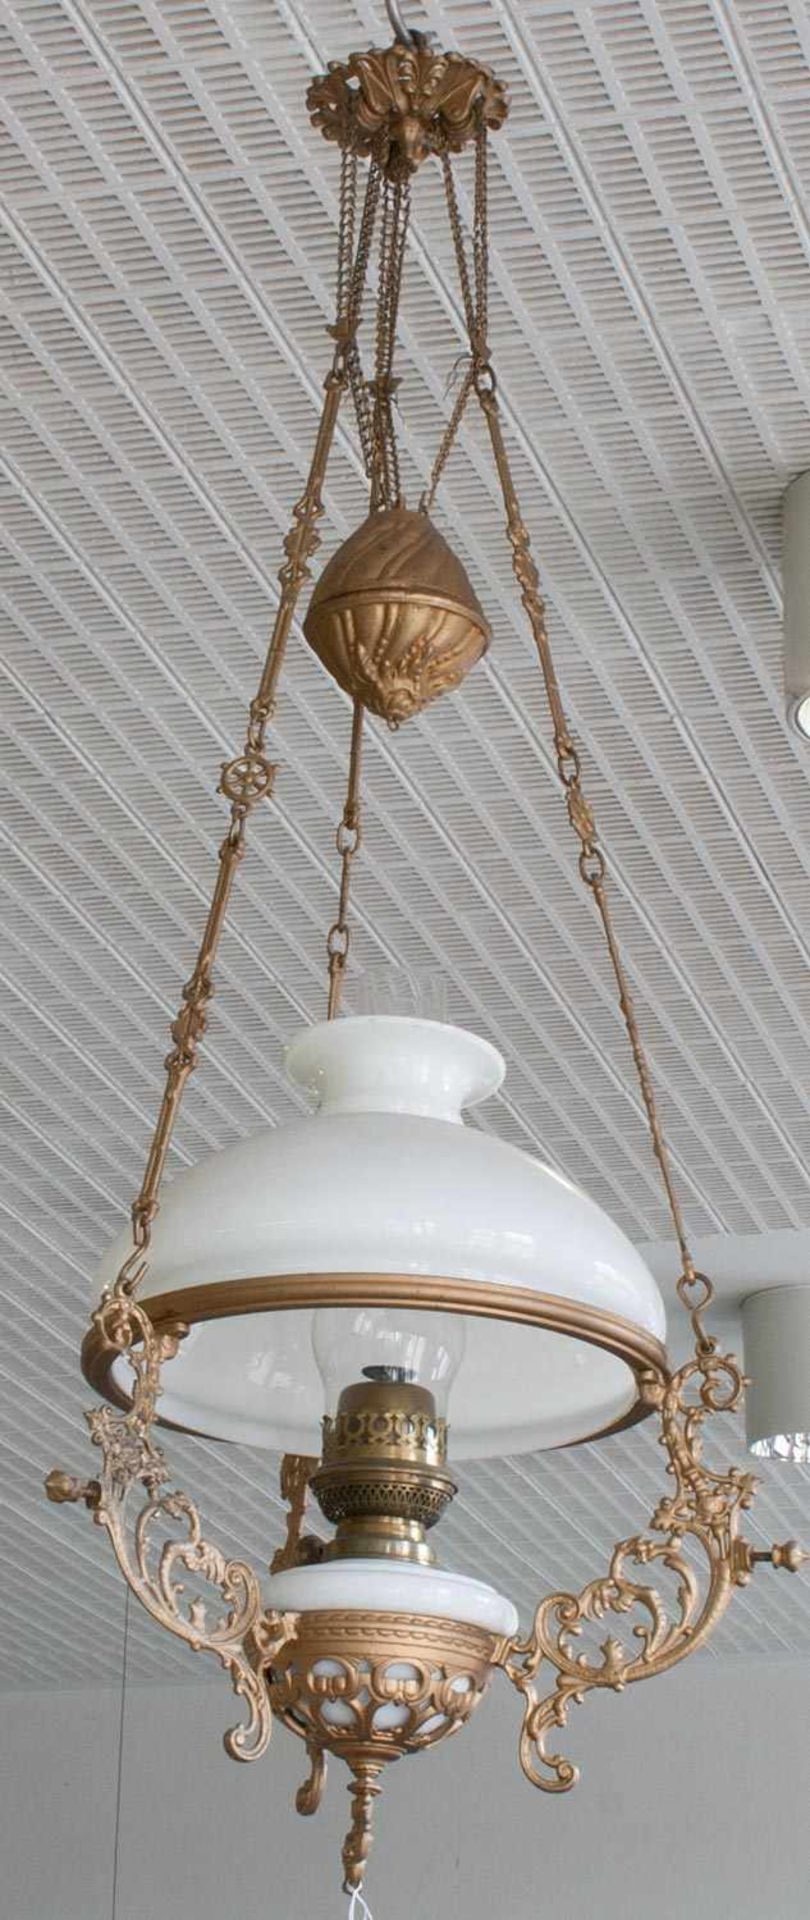 Gründerzeit - Petroleumlampe um 1885, höhenverstellbar, Petroleumlampe mit intaktem Behälter, Kolben